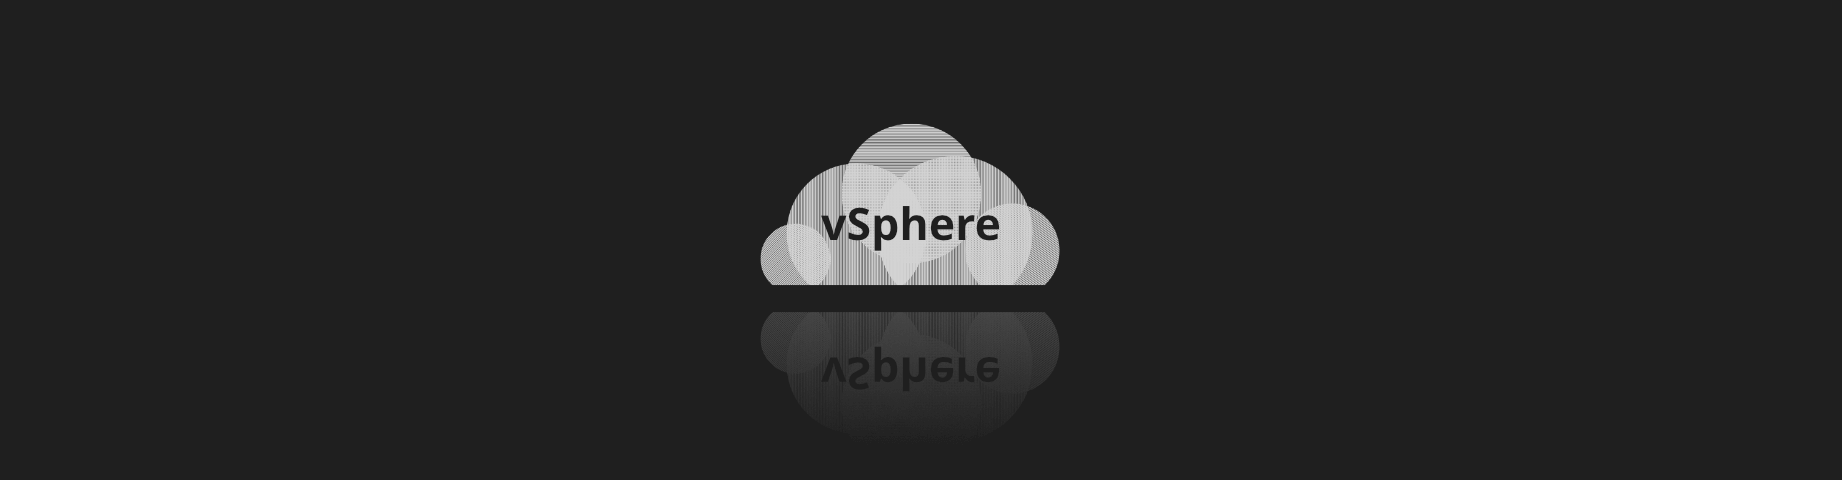 vSphere